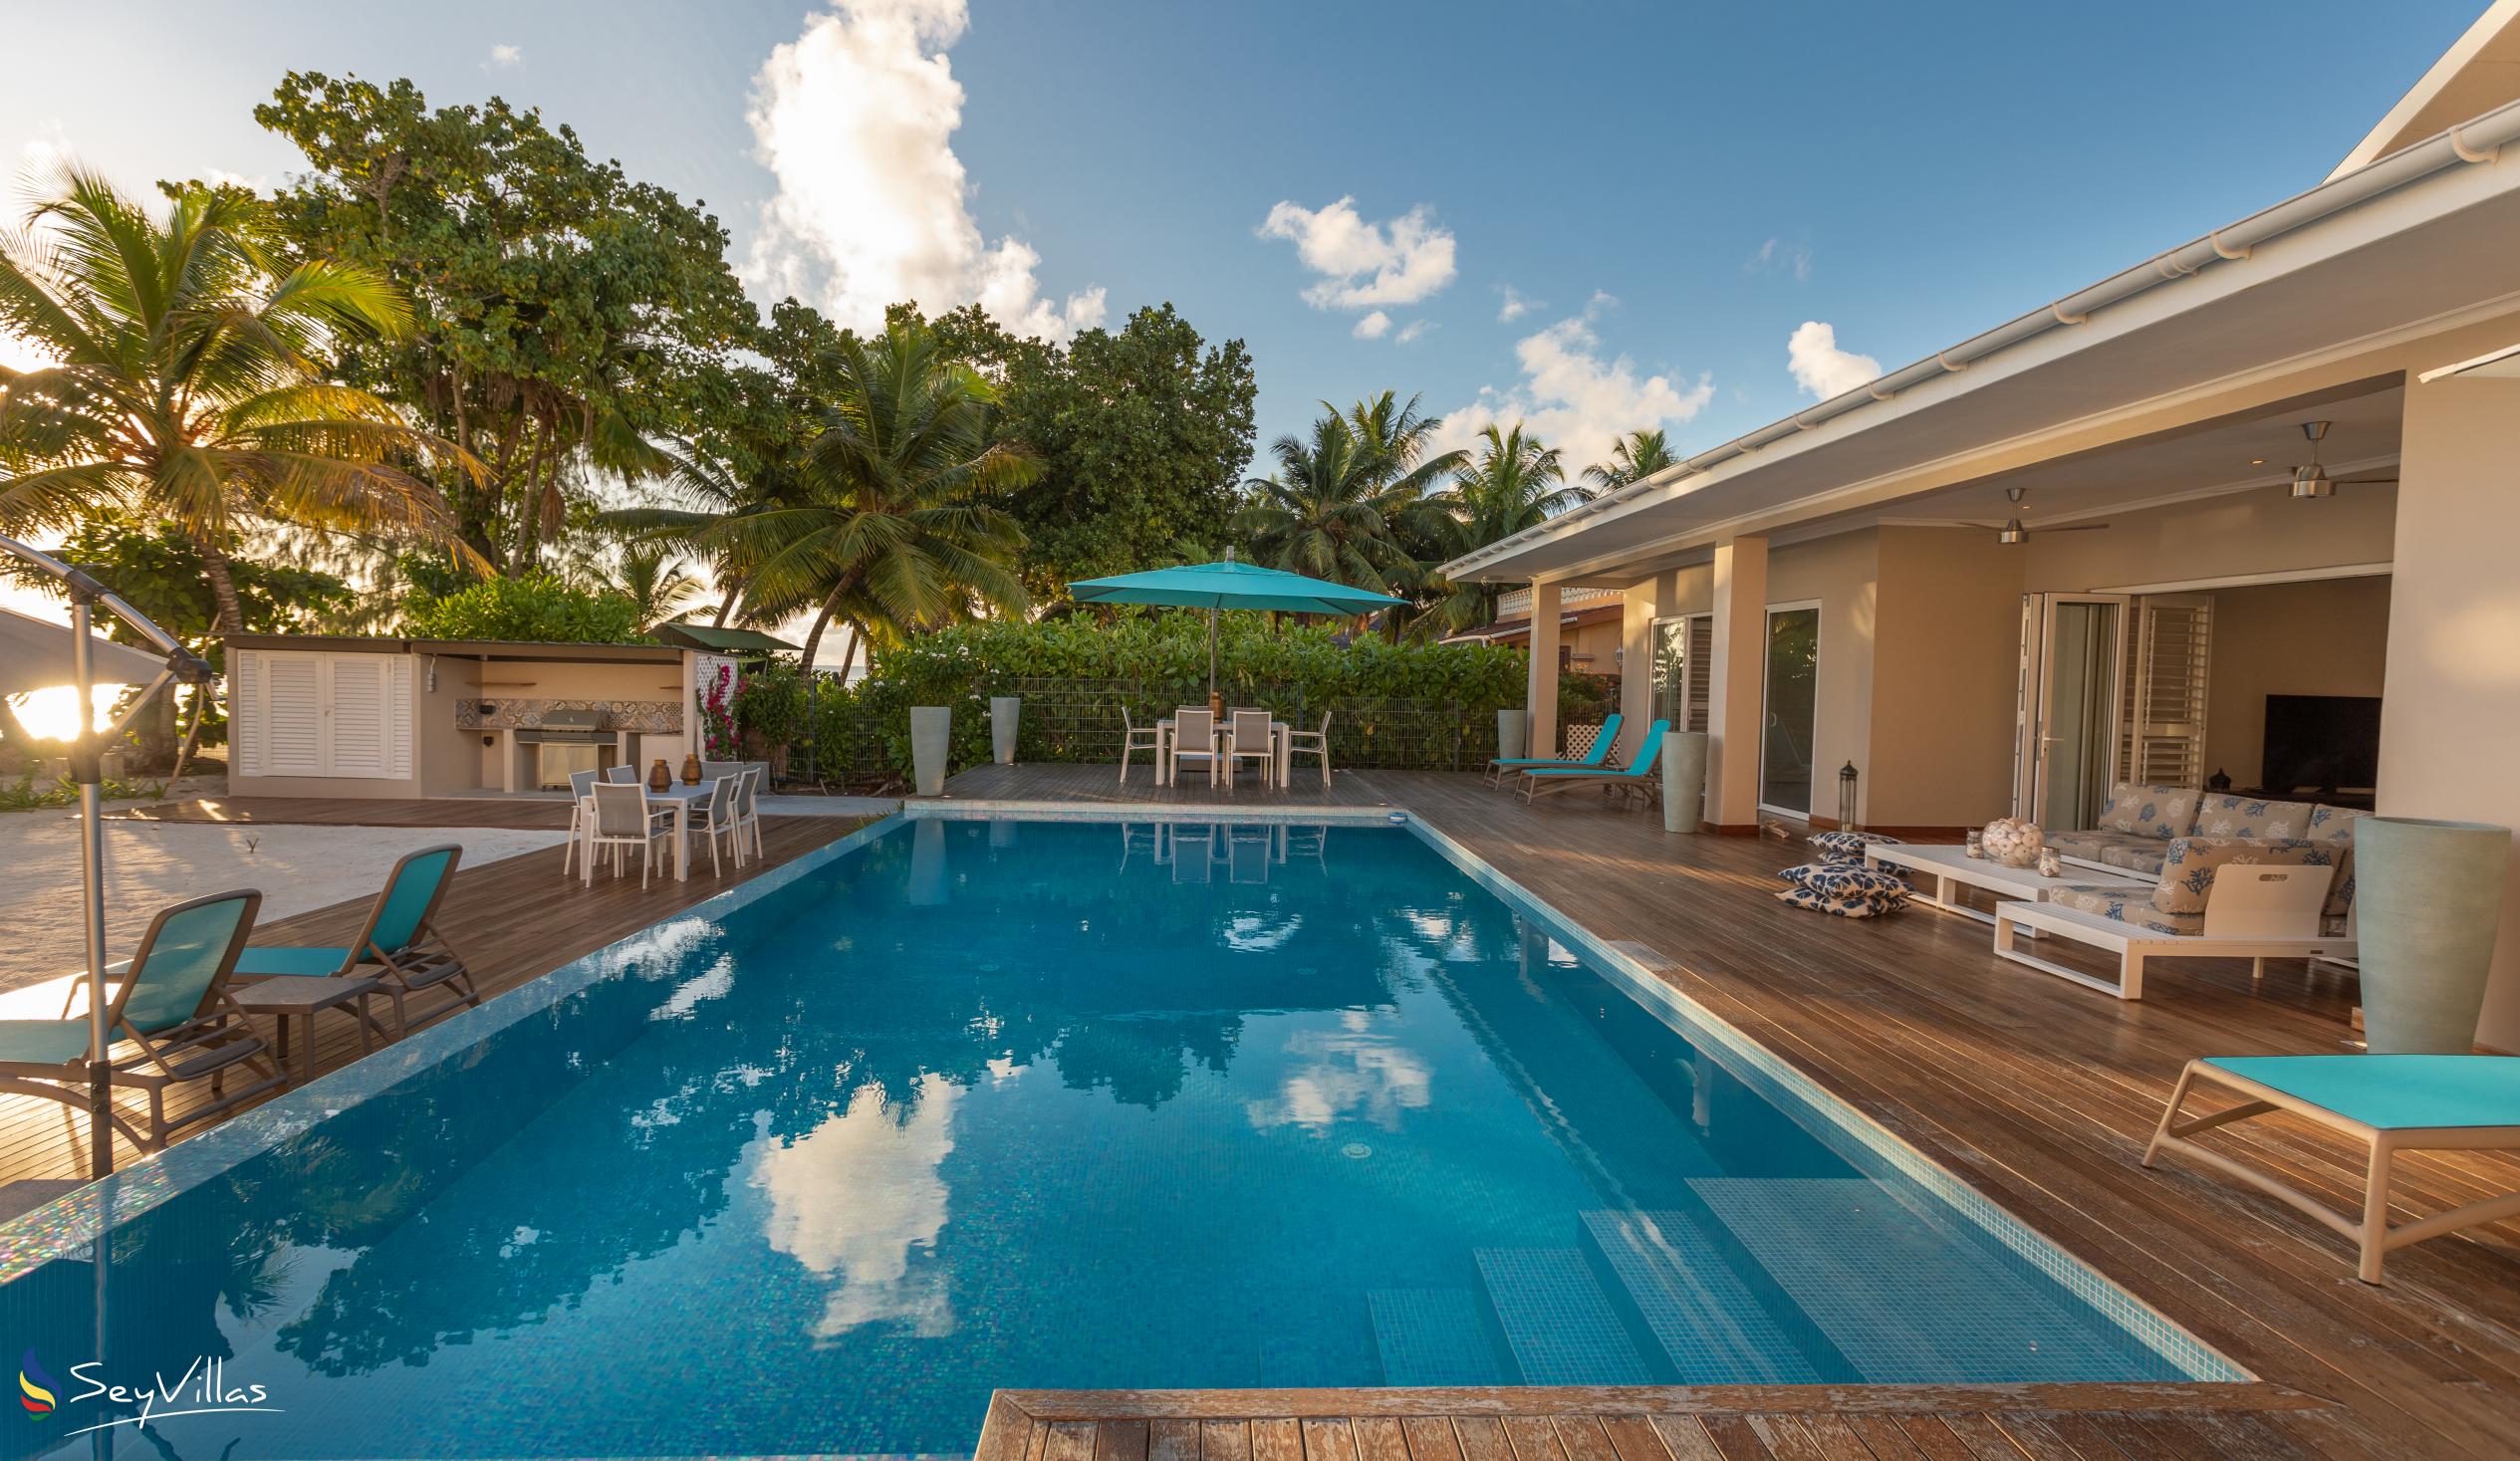 Foto 50: Villas Coco Beach - La Maison Villas Coco Beach - Praslin (Seychellen)